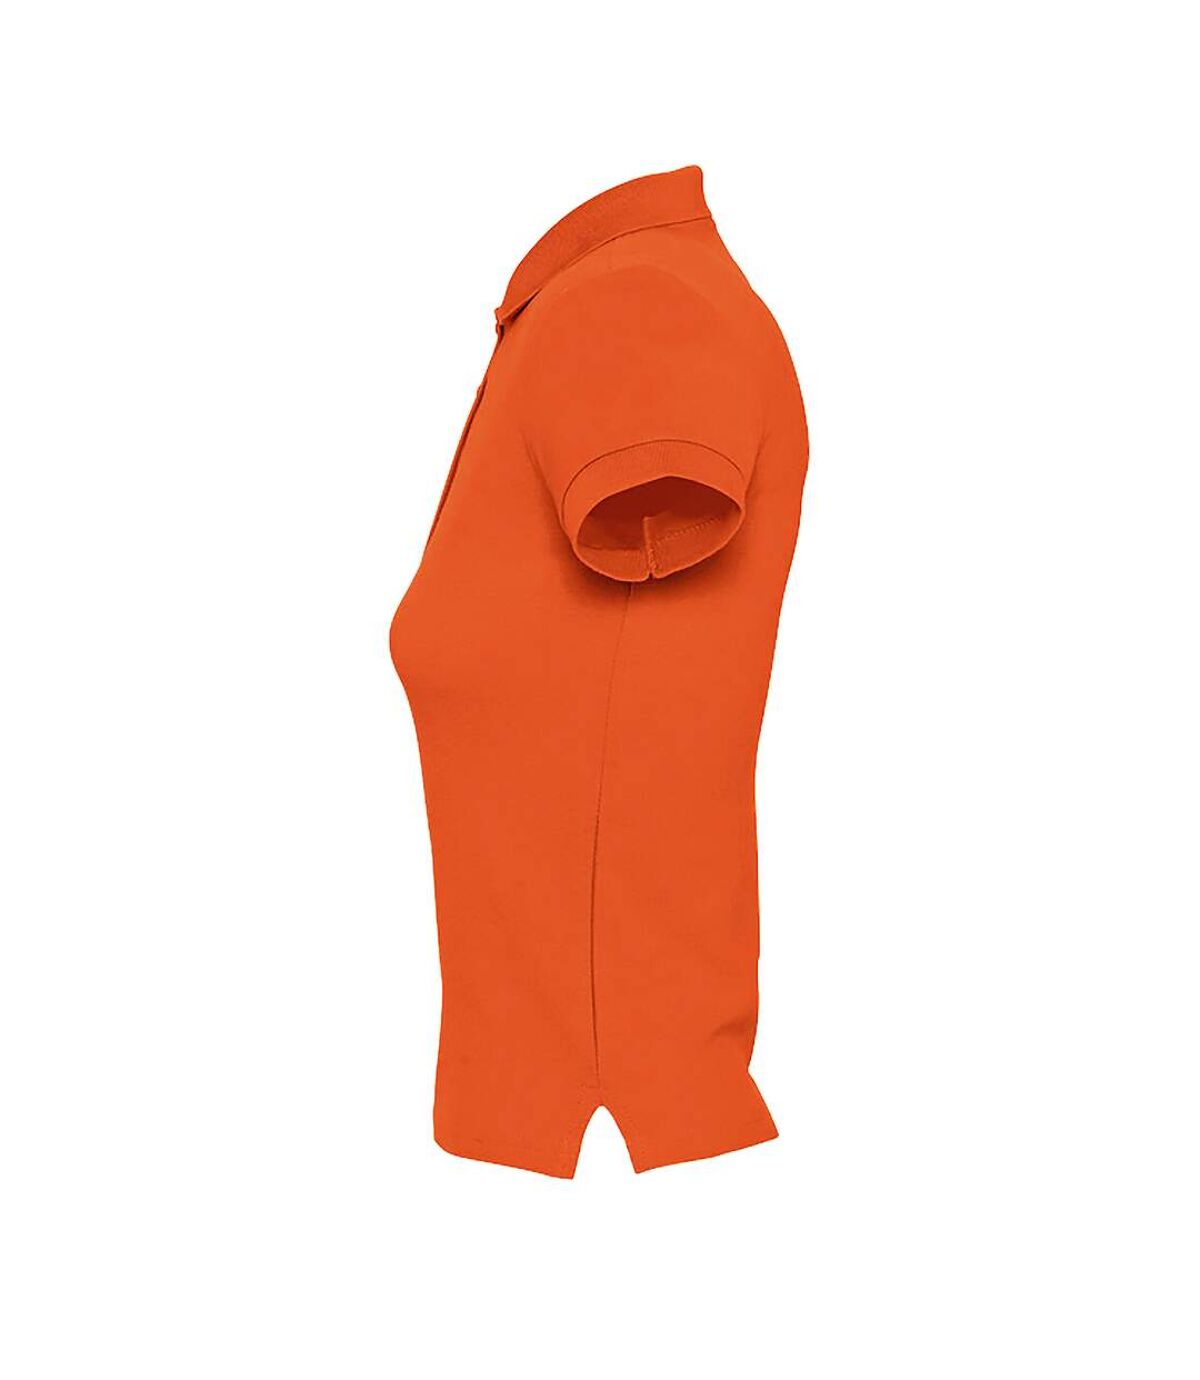 SOLS - Polo manches courtes PEOPLE - Femme (Orange) - UTPC319